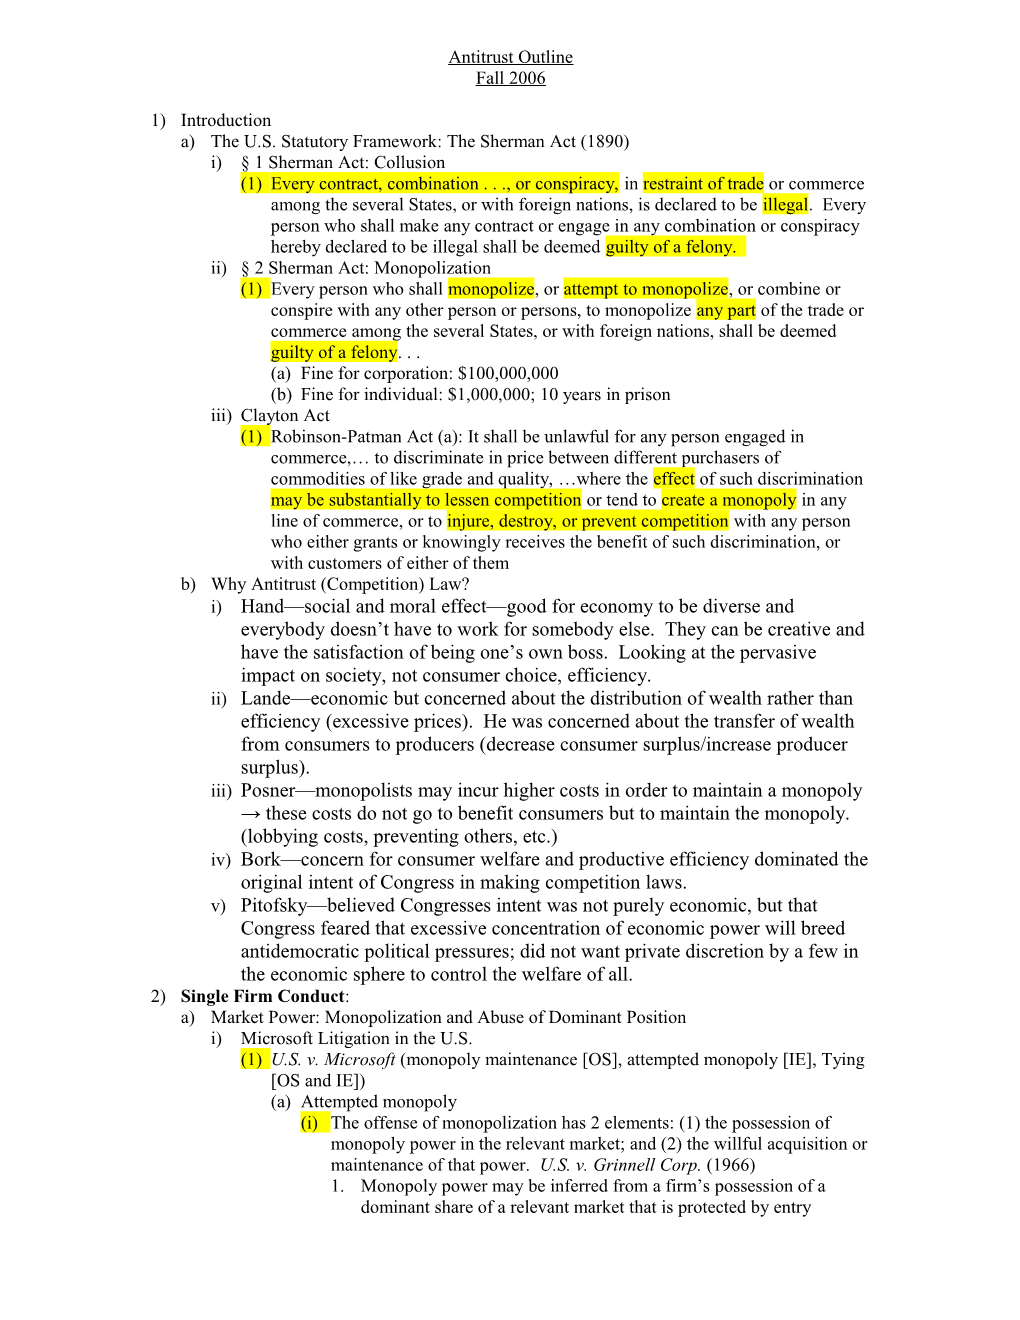 A)The U.S. Statutory Framework: the Sherman Act (1890)